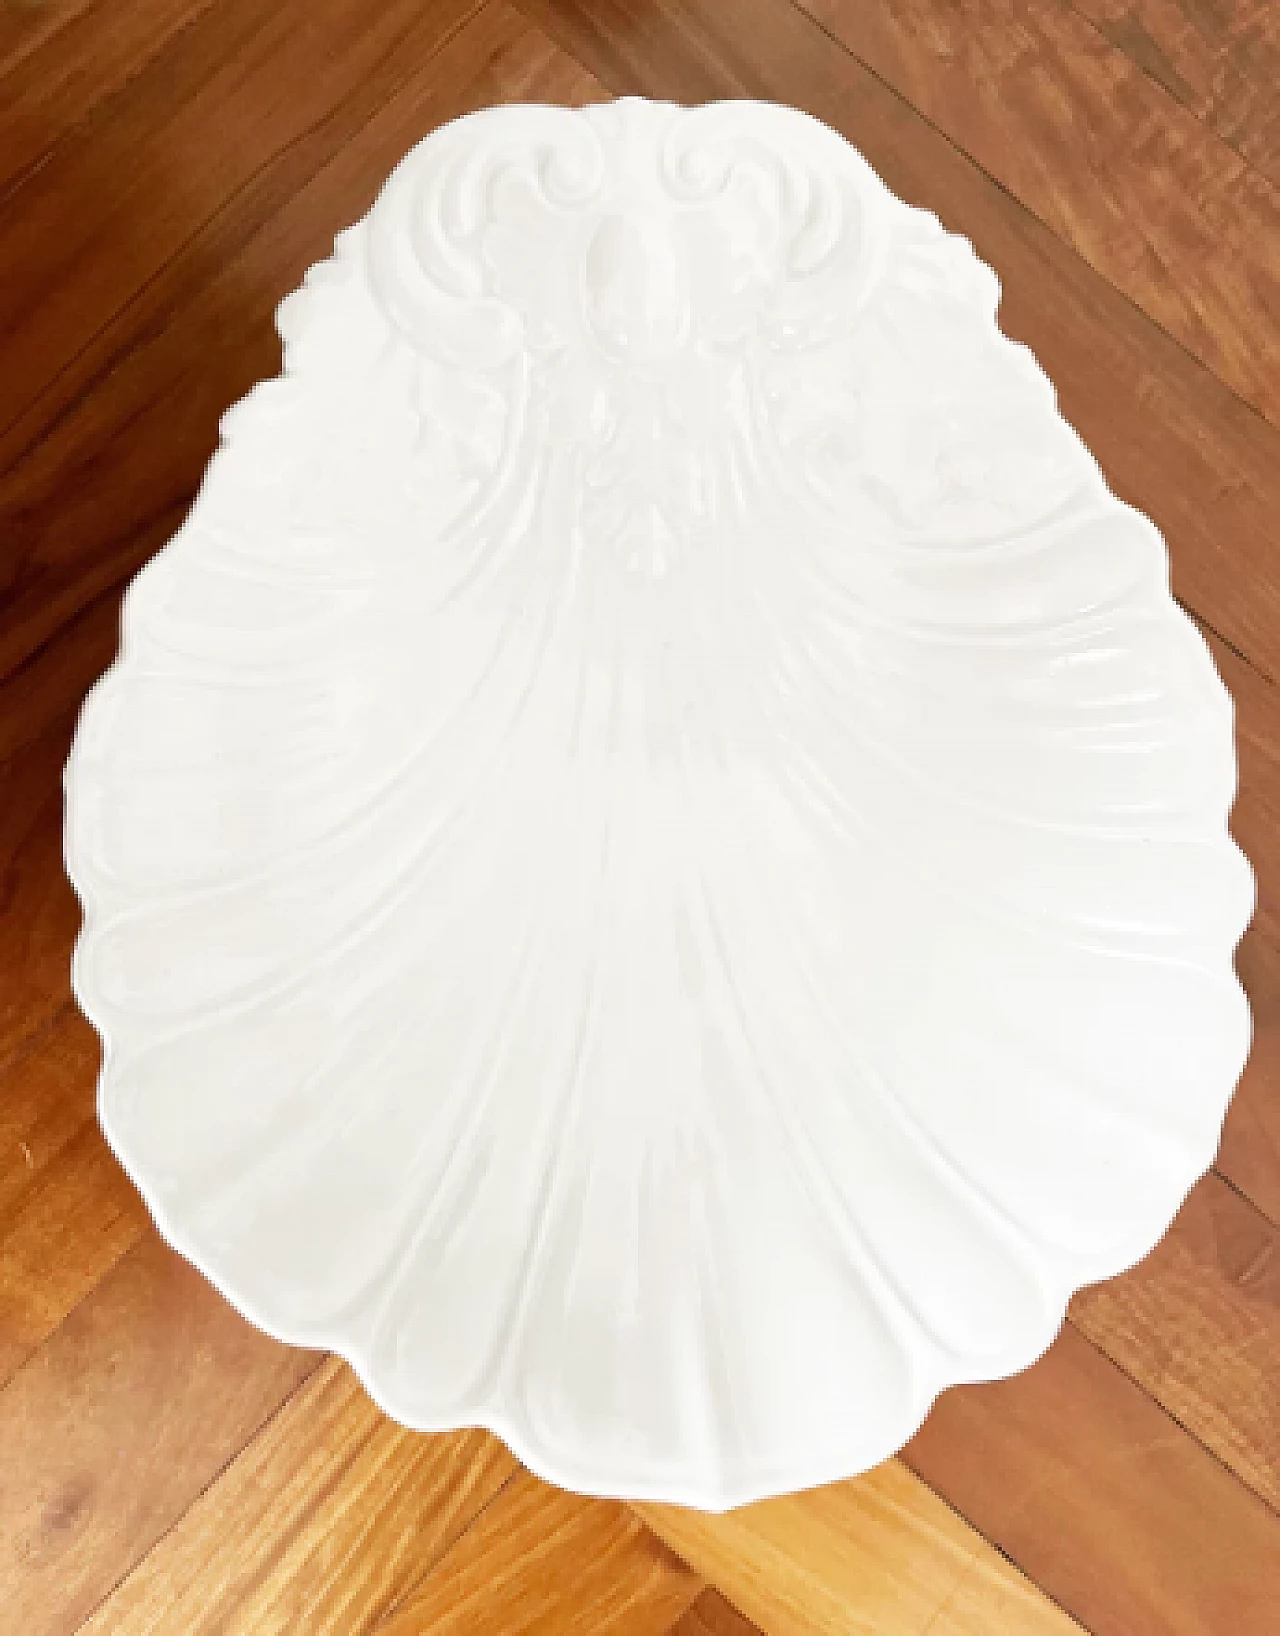 Ceramic shell centerpiece by Richard Ginori, 20th century 3